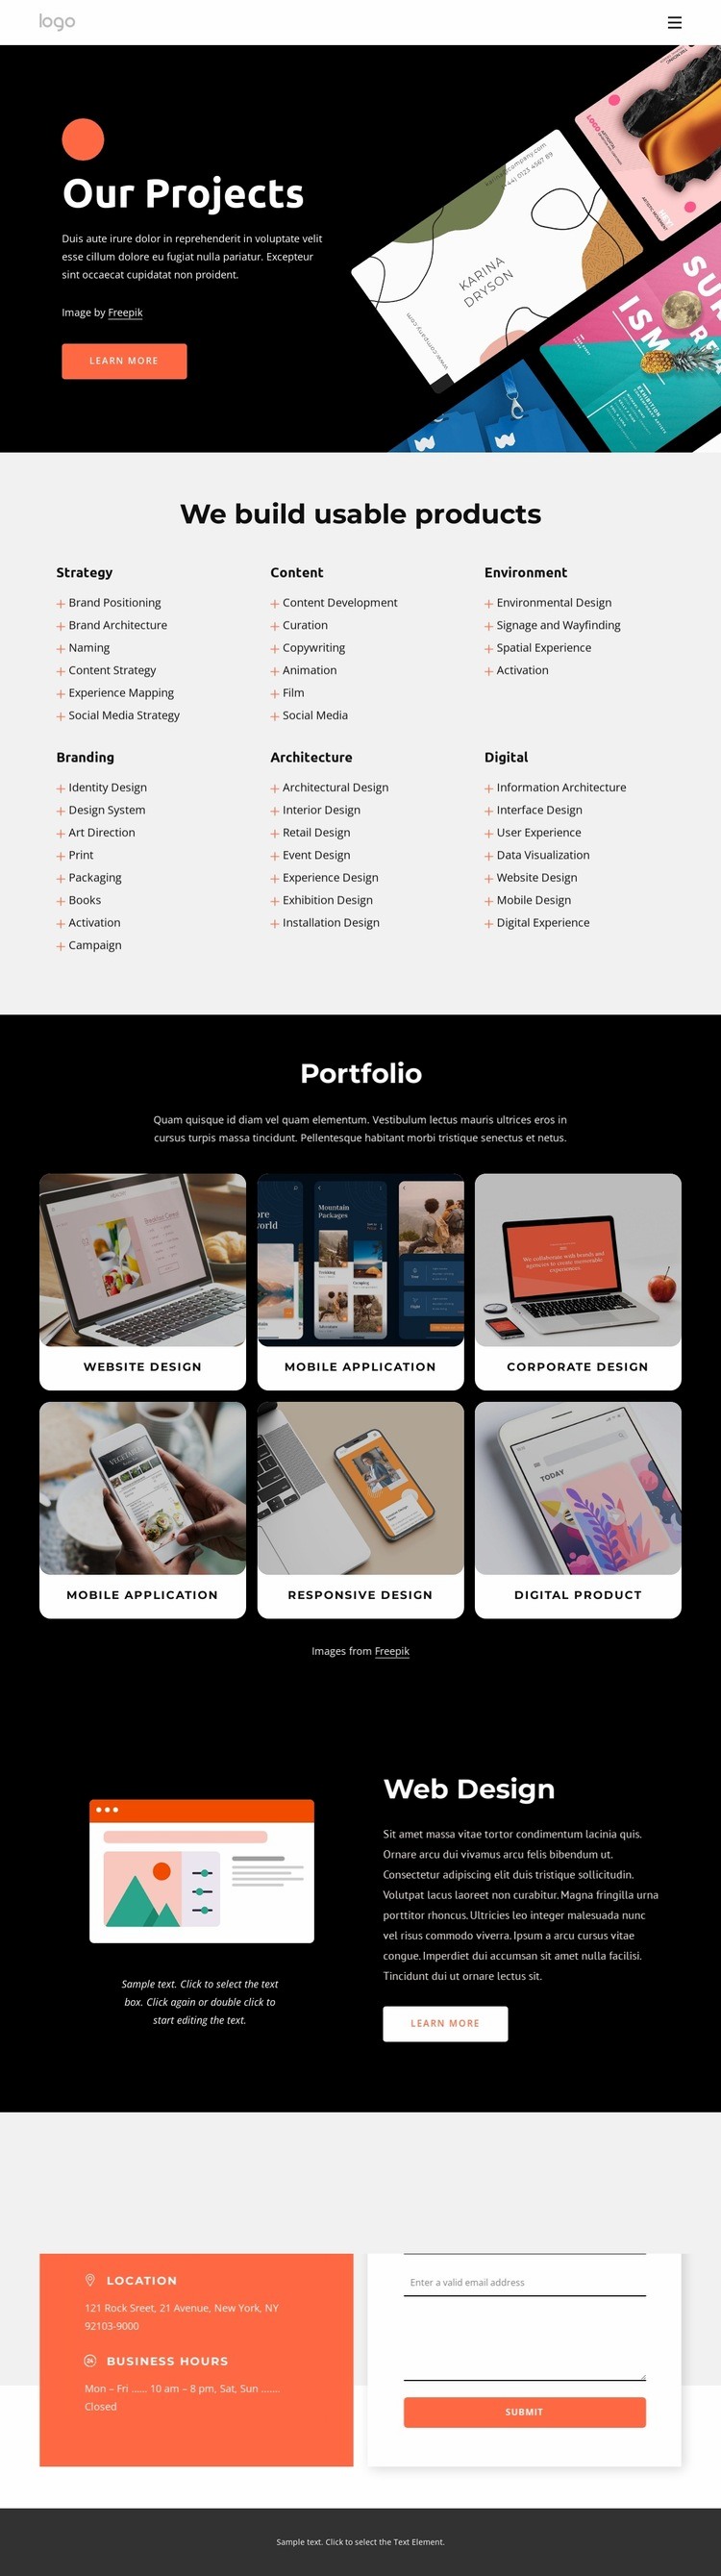 Our creative portfolio Homepage Design